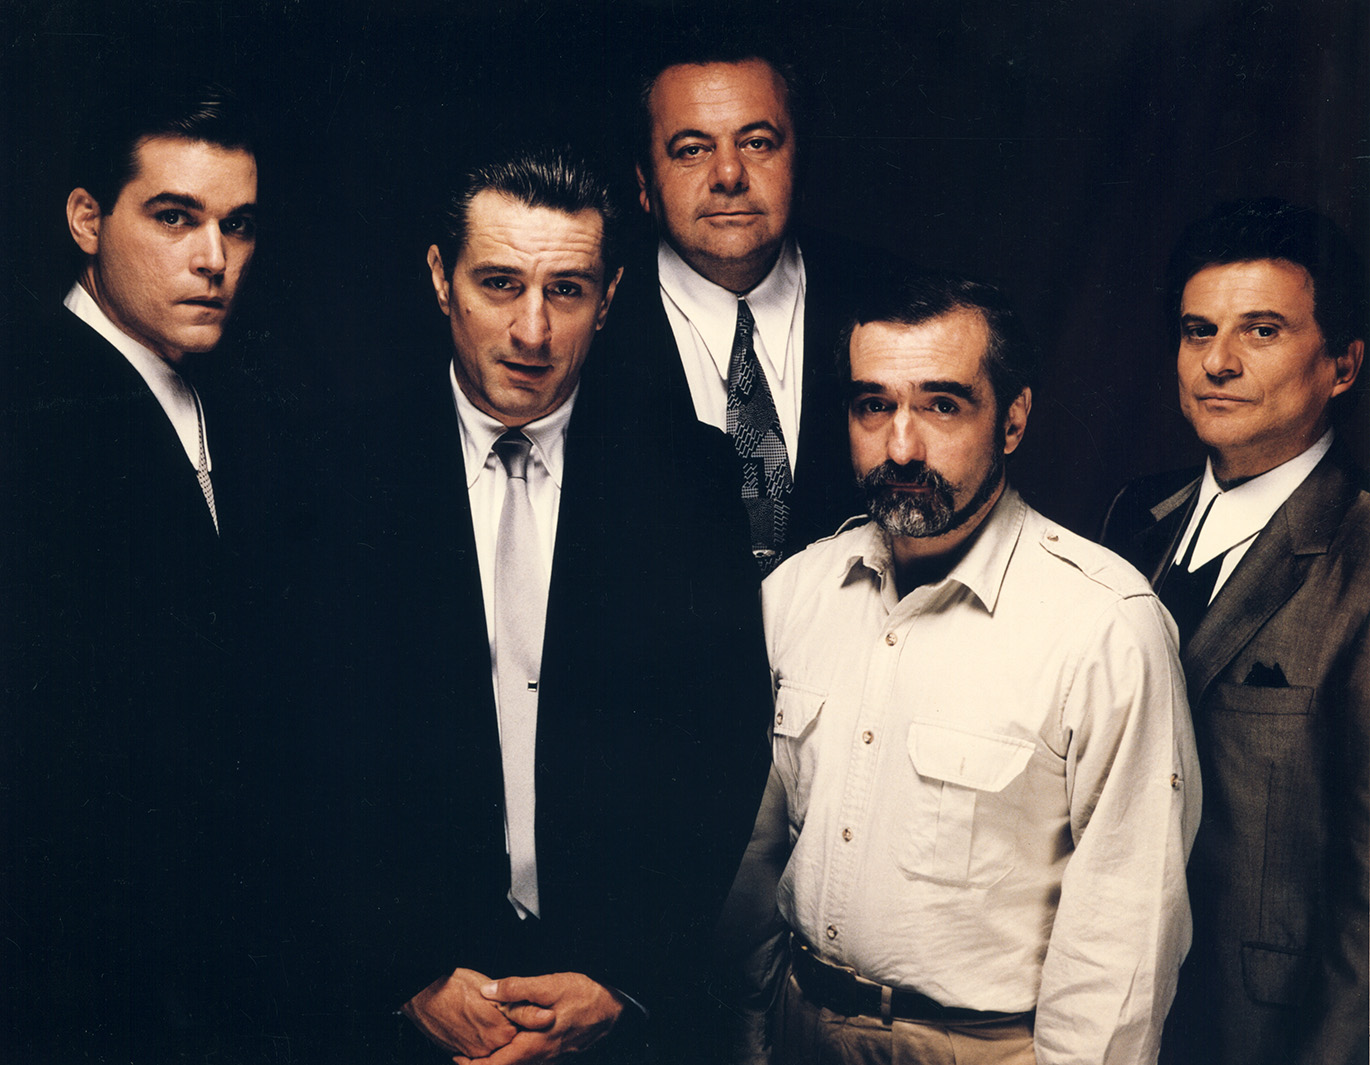 Ray Liotta, Robert DeNiro, Paul Sorvino, Martin Scorsese e/and Joe Pesci, Goodfellas, 1990. Martin Scorsese Collection, New York.